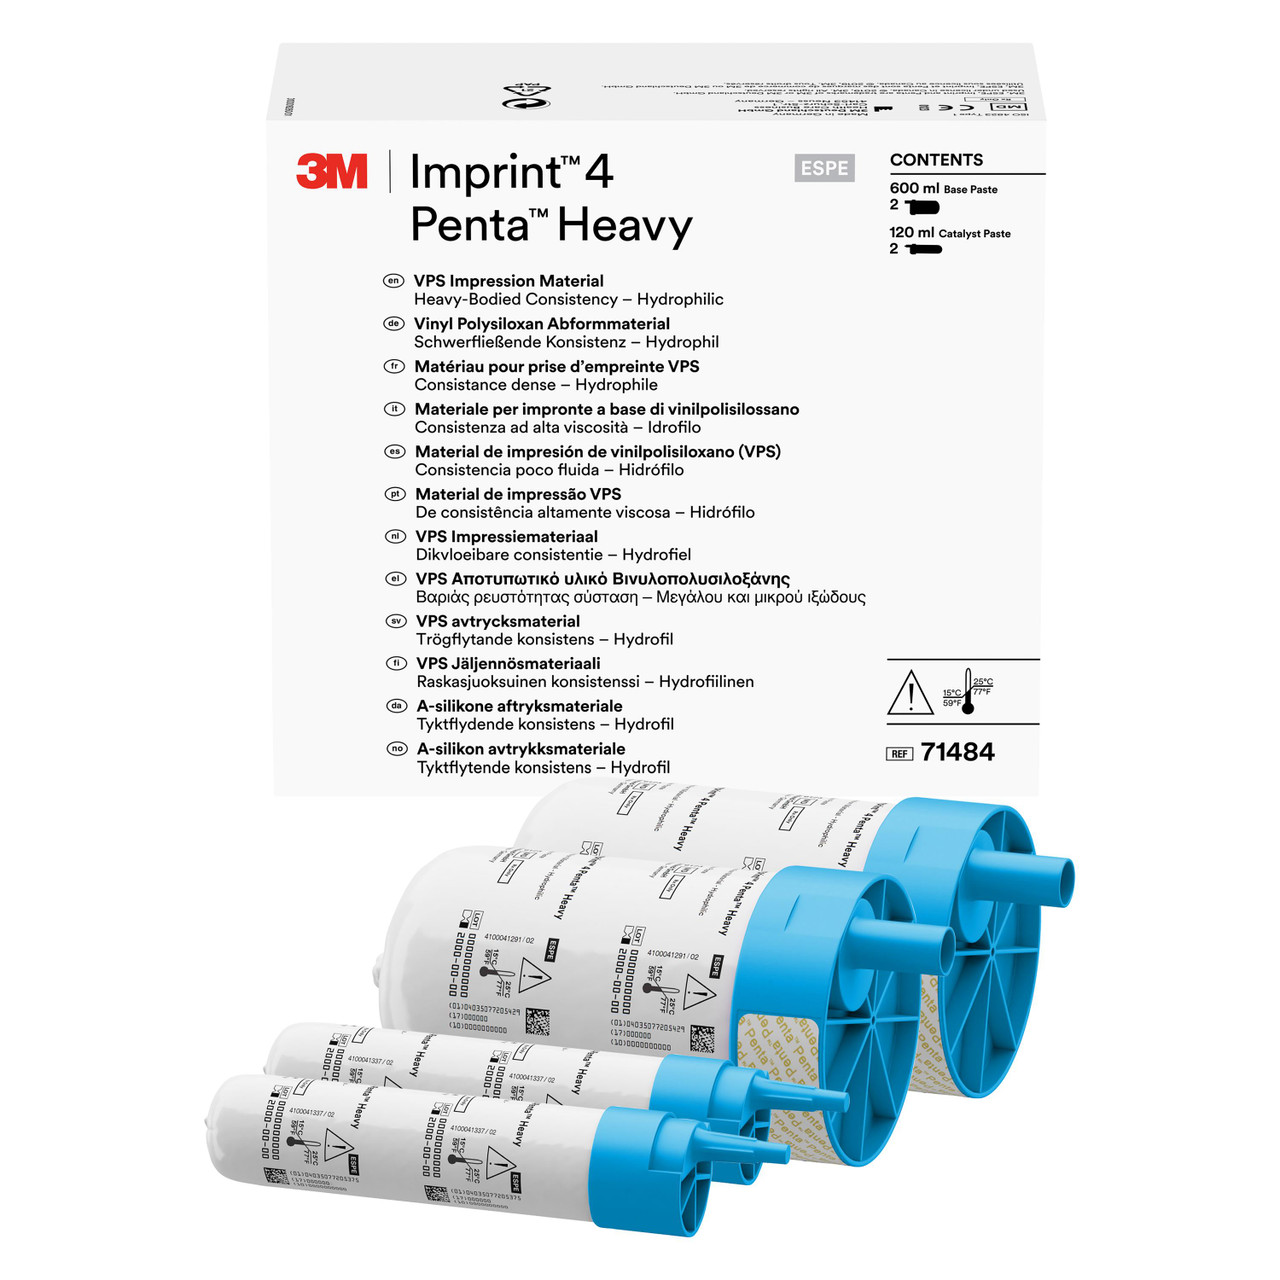 3M Imprint 4 Penta Heavy VPS Impression Material Refill, 71484